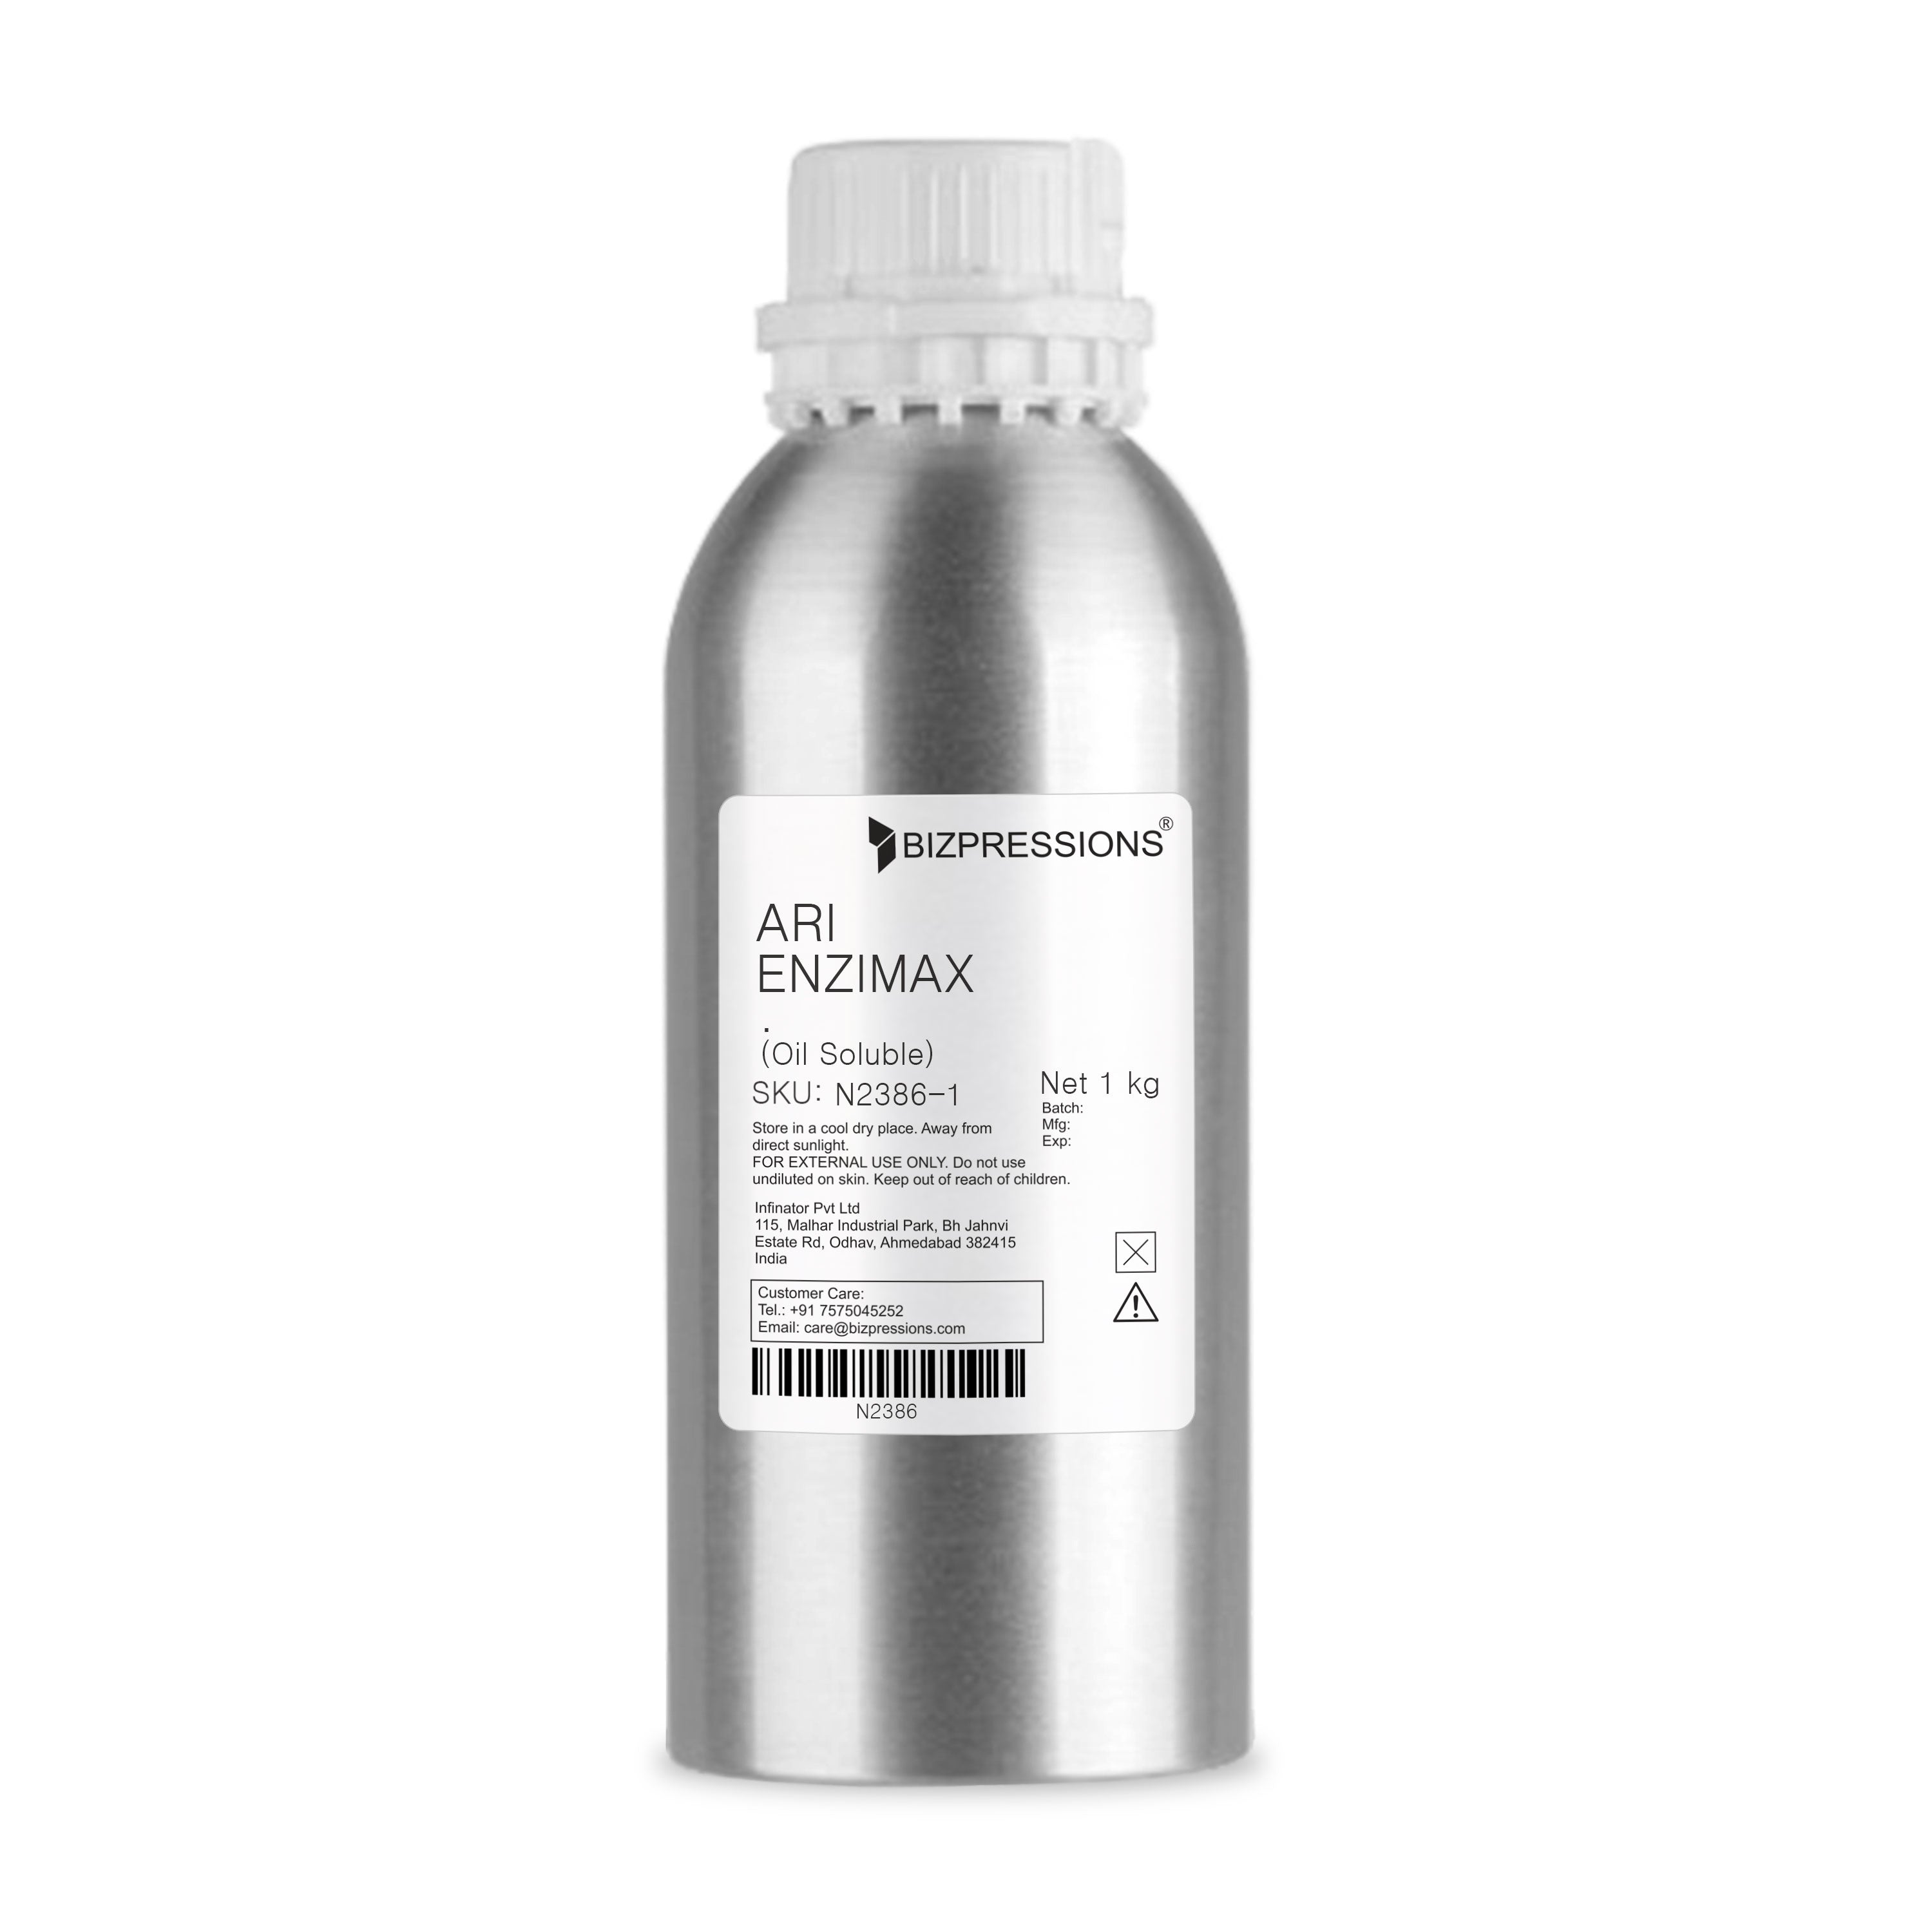 ARI ENZIMAX - Fragrance (Oil Soluble)